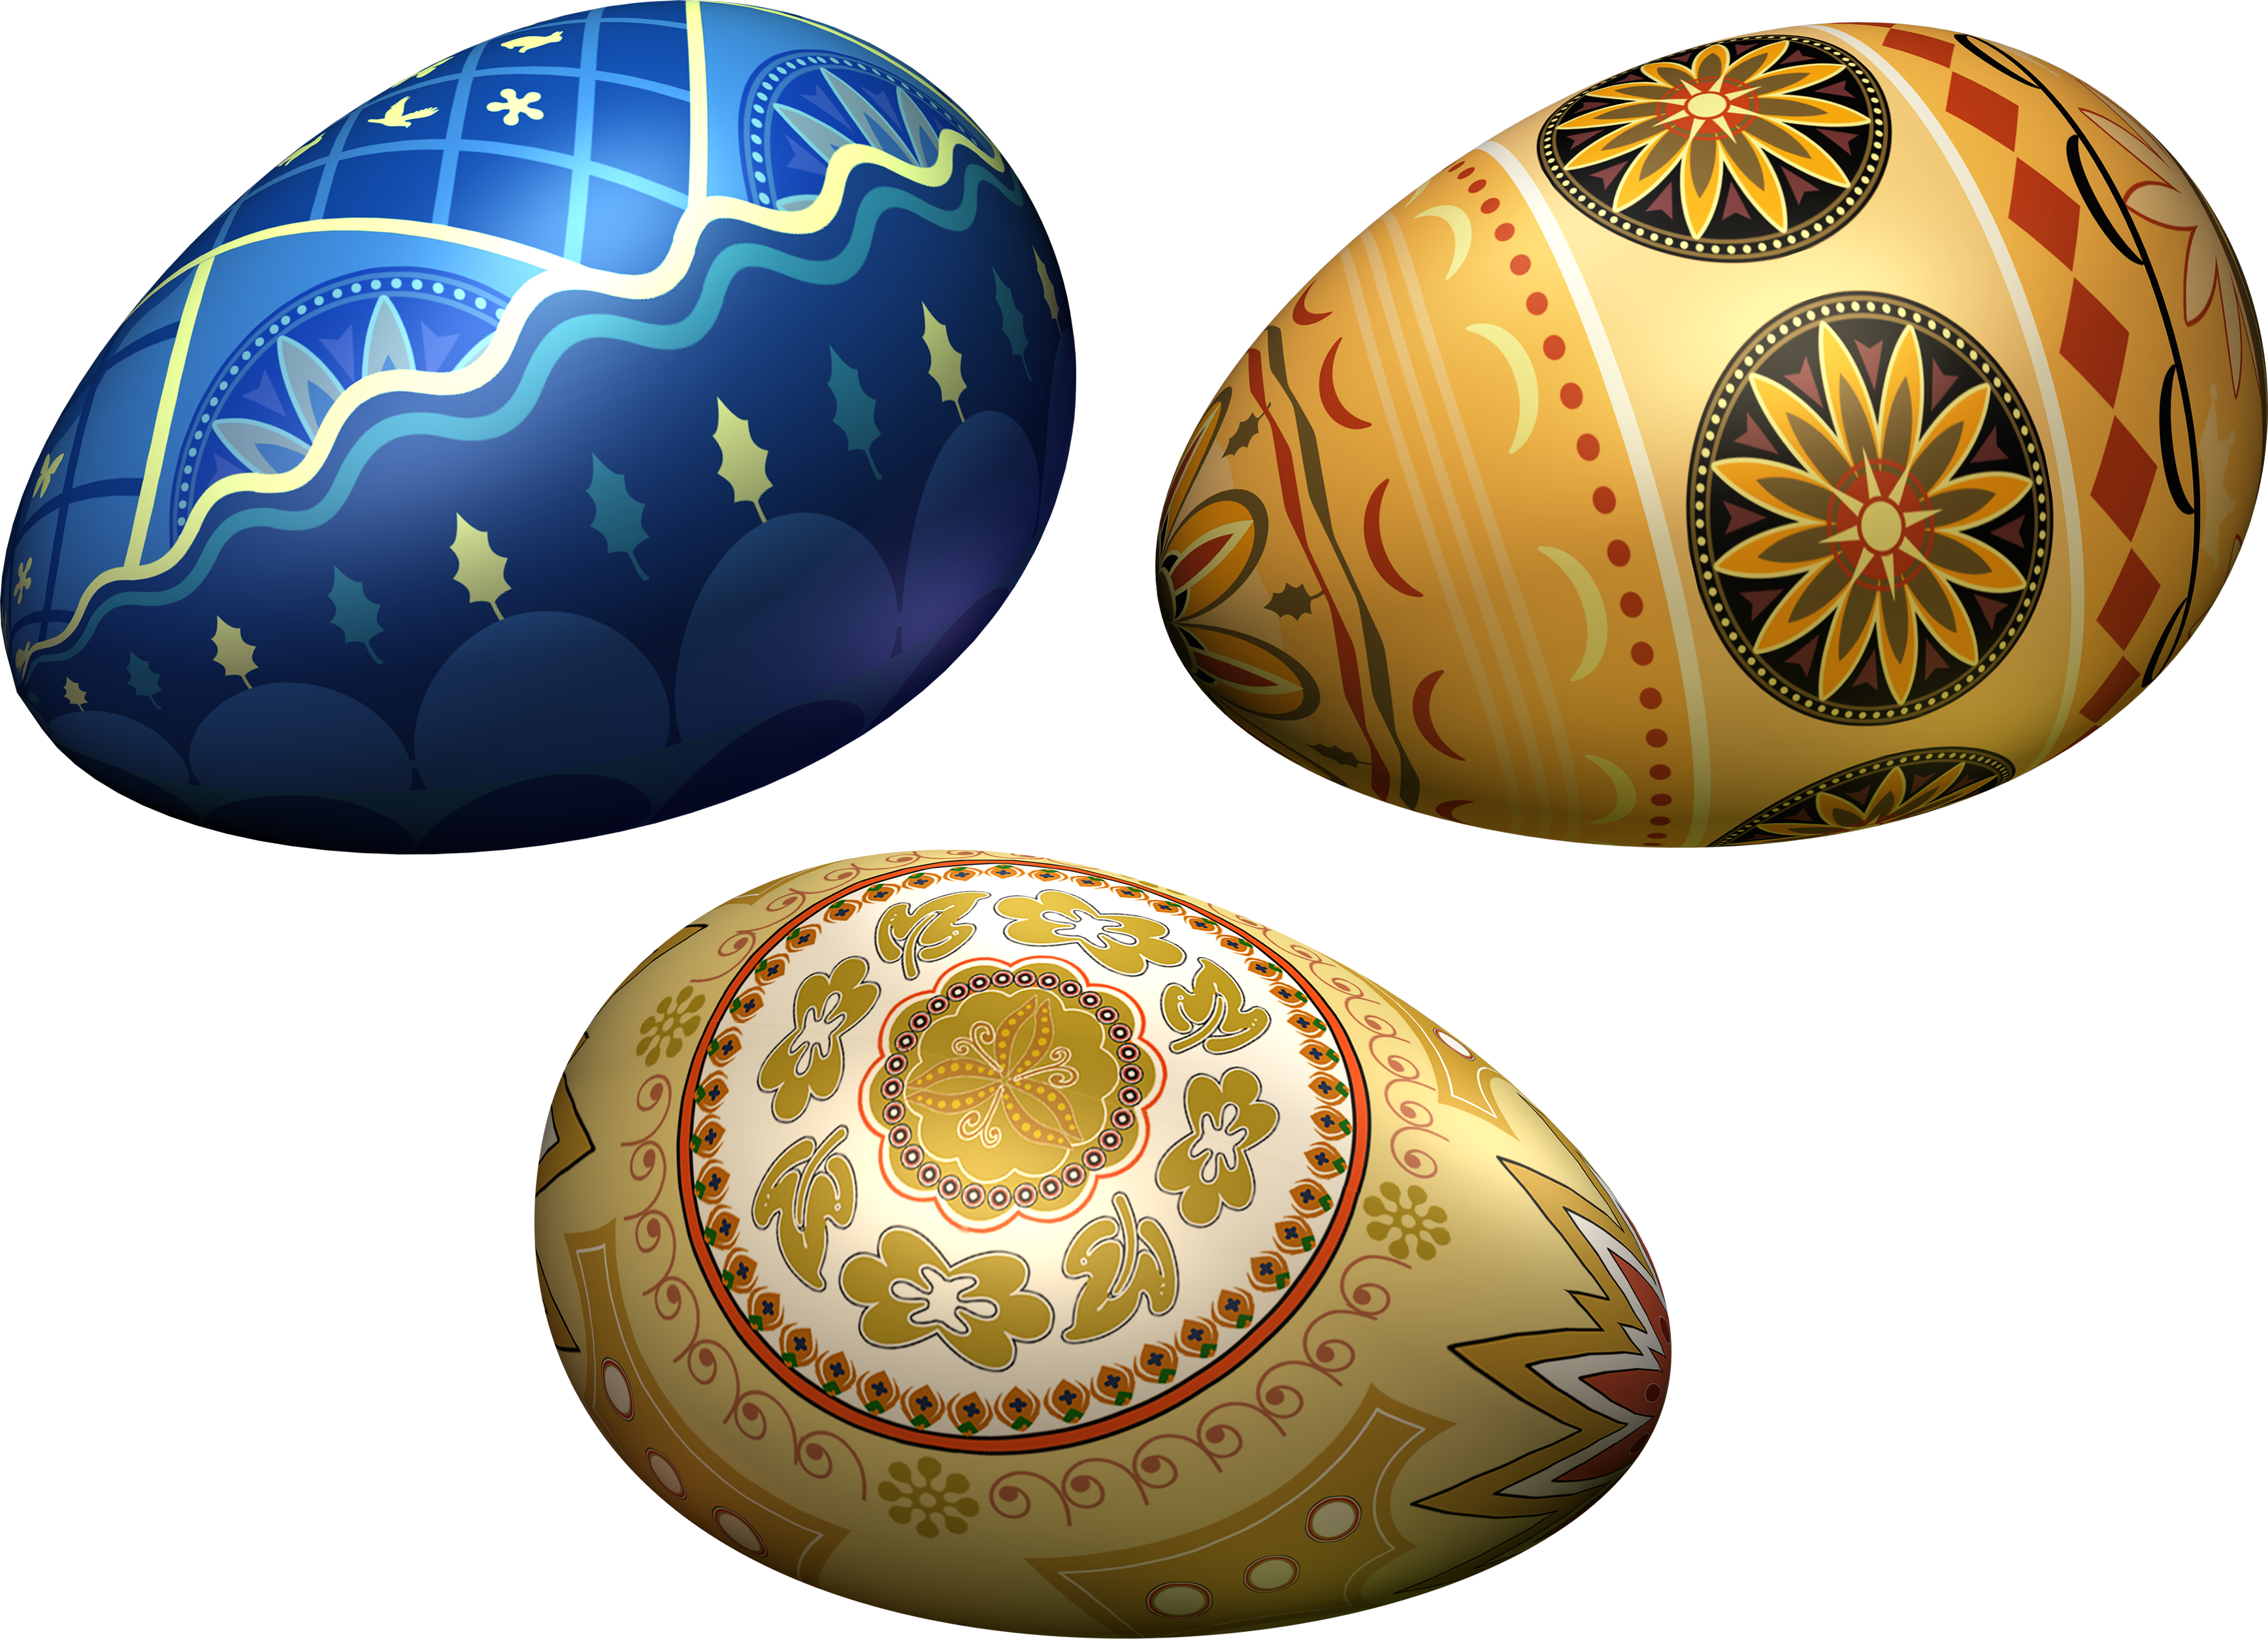 œufs de Pâques